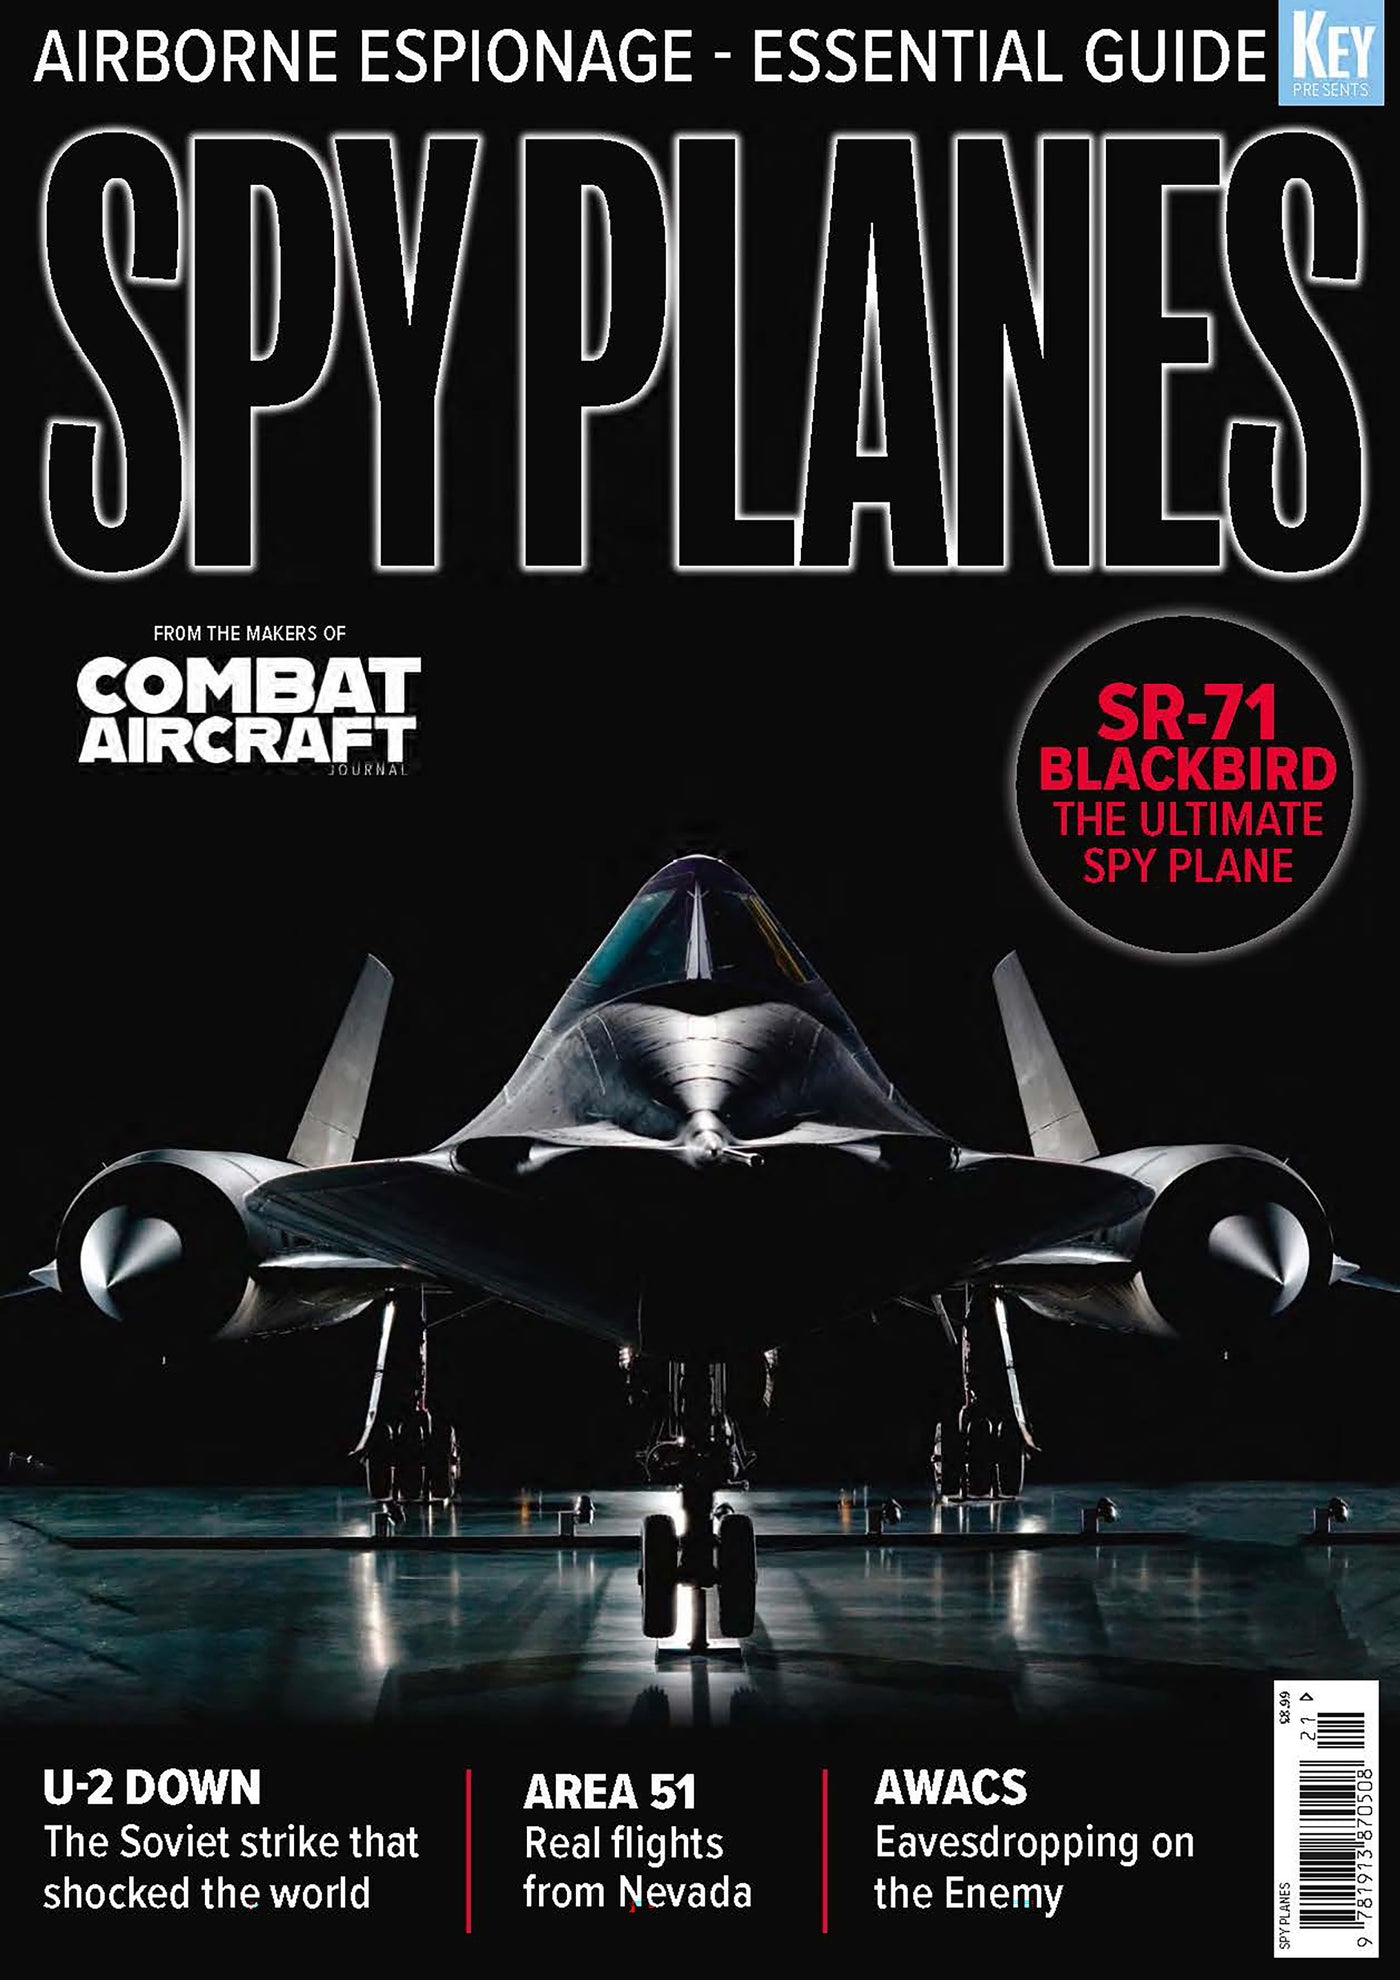 Spy Planes